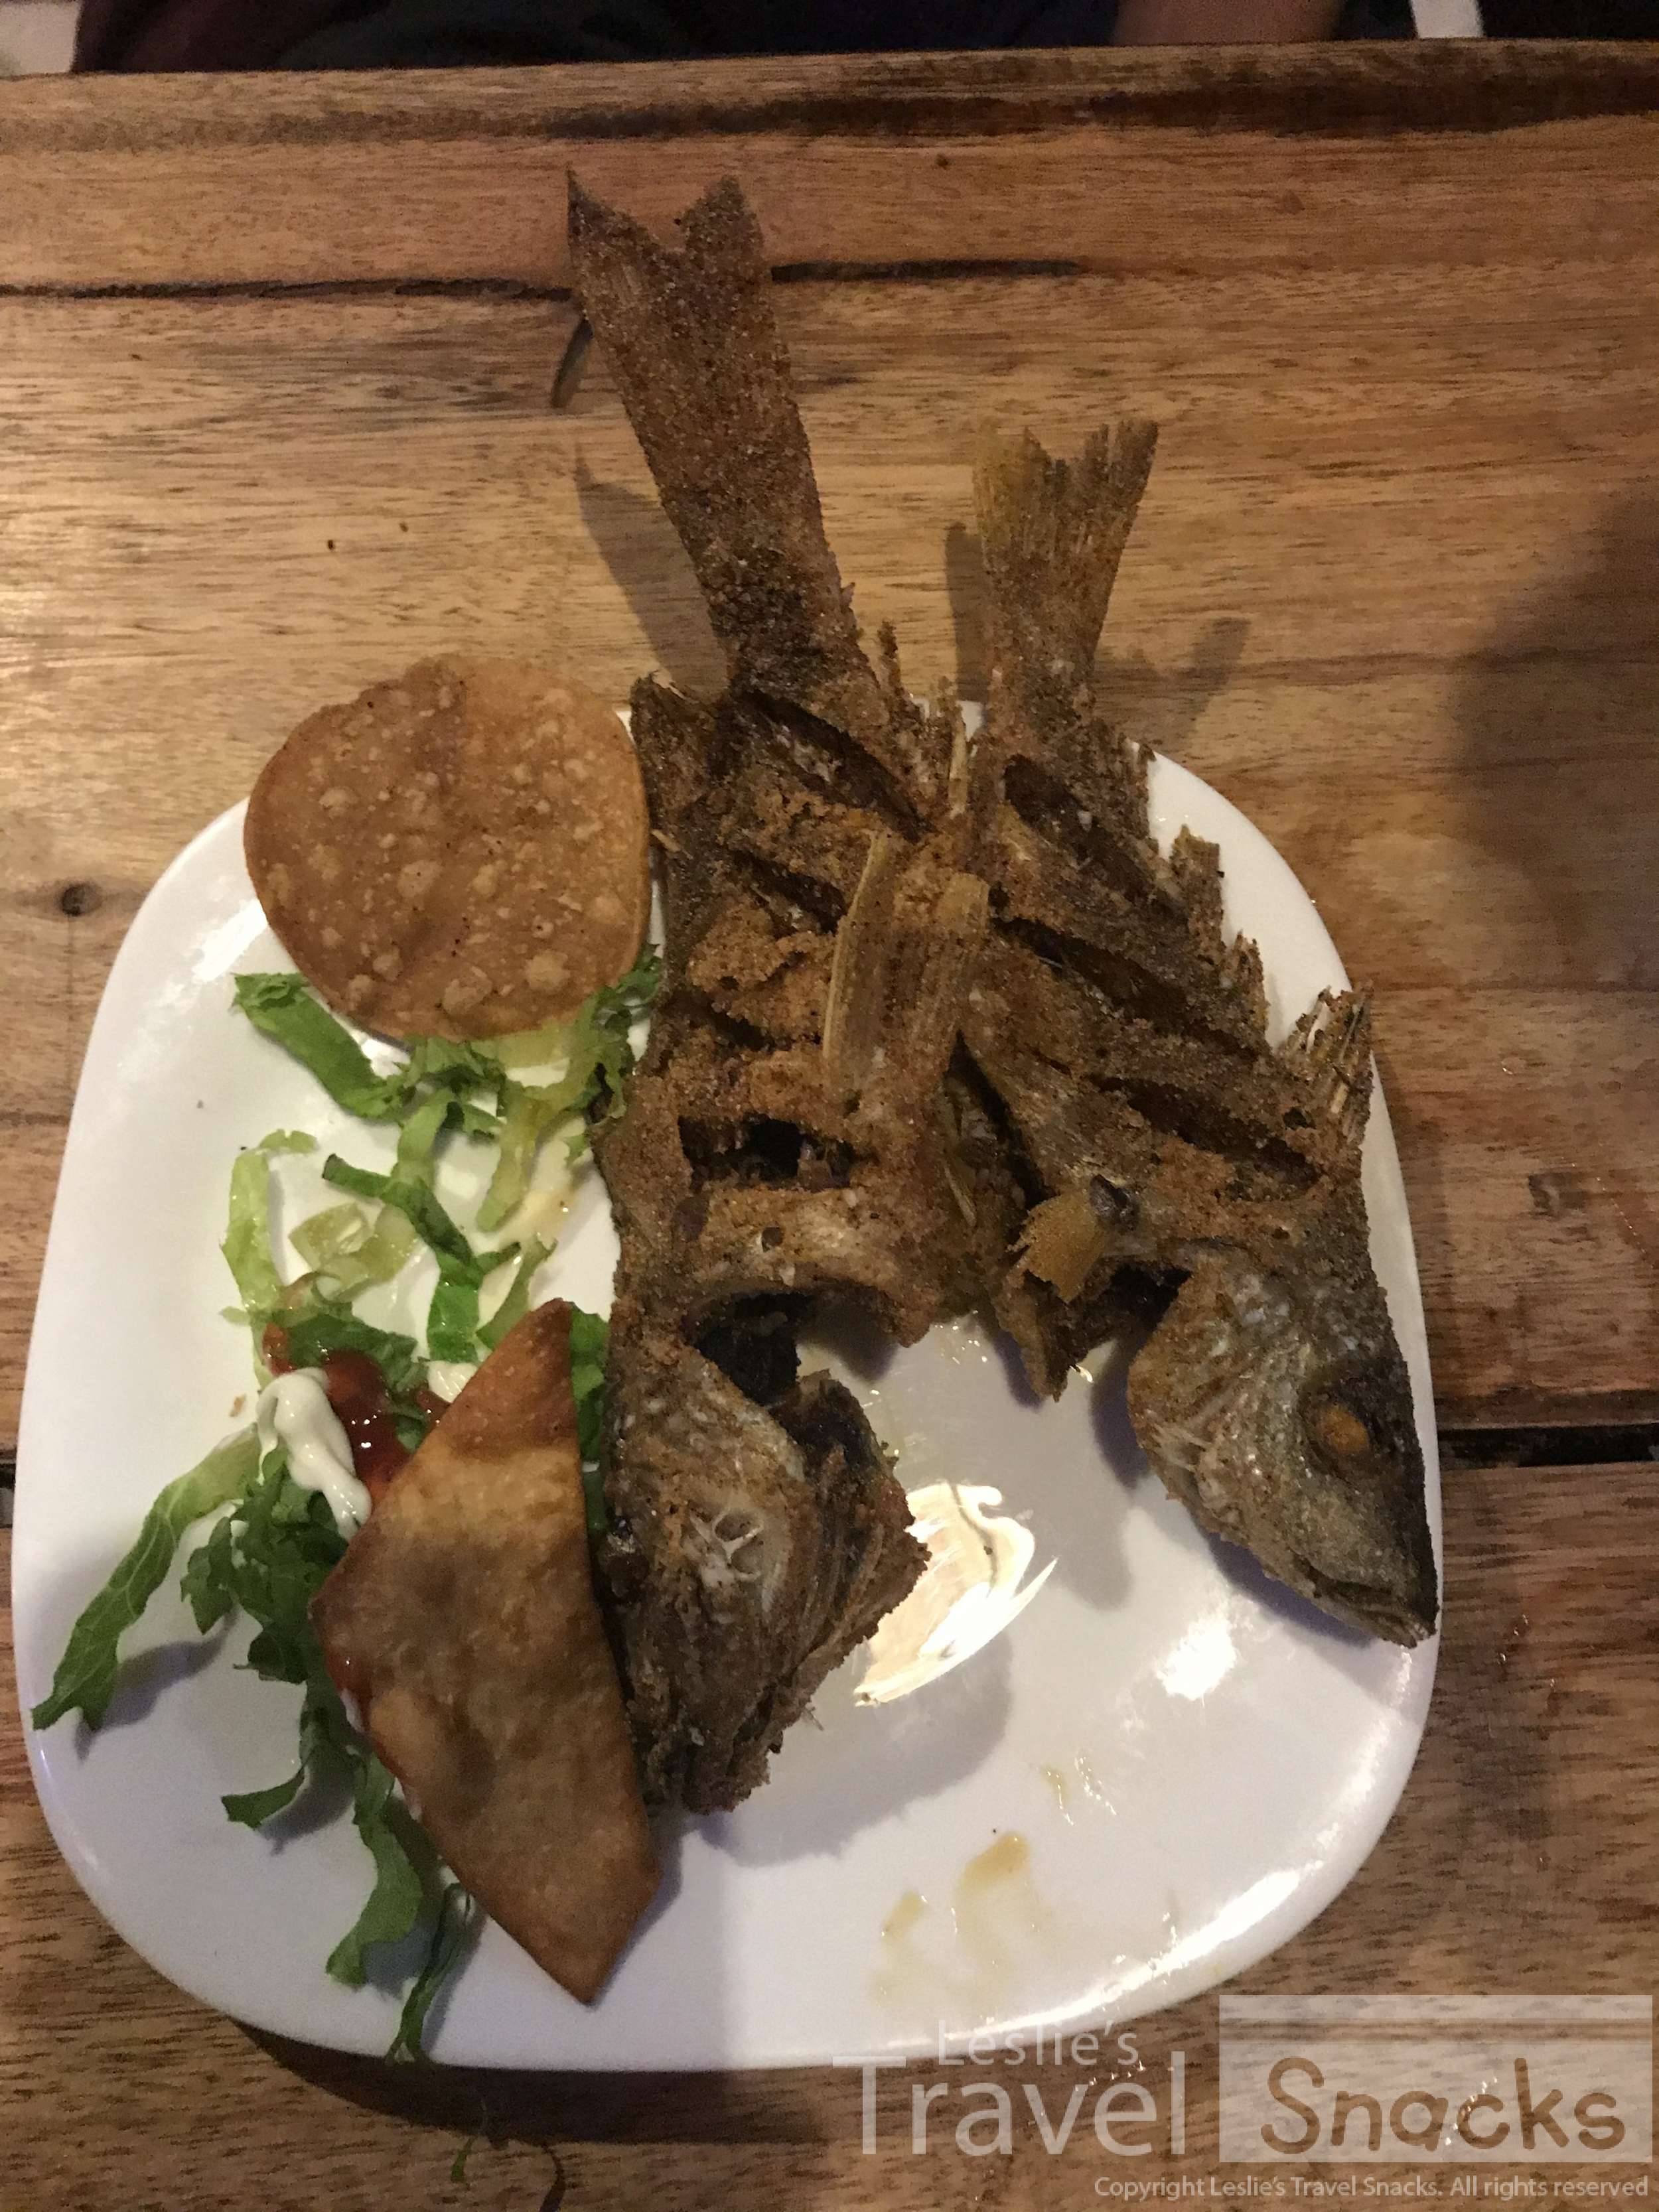 Bocas at Varvilla Bar. These fried fish were C1,000 ($2)